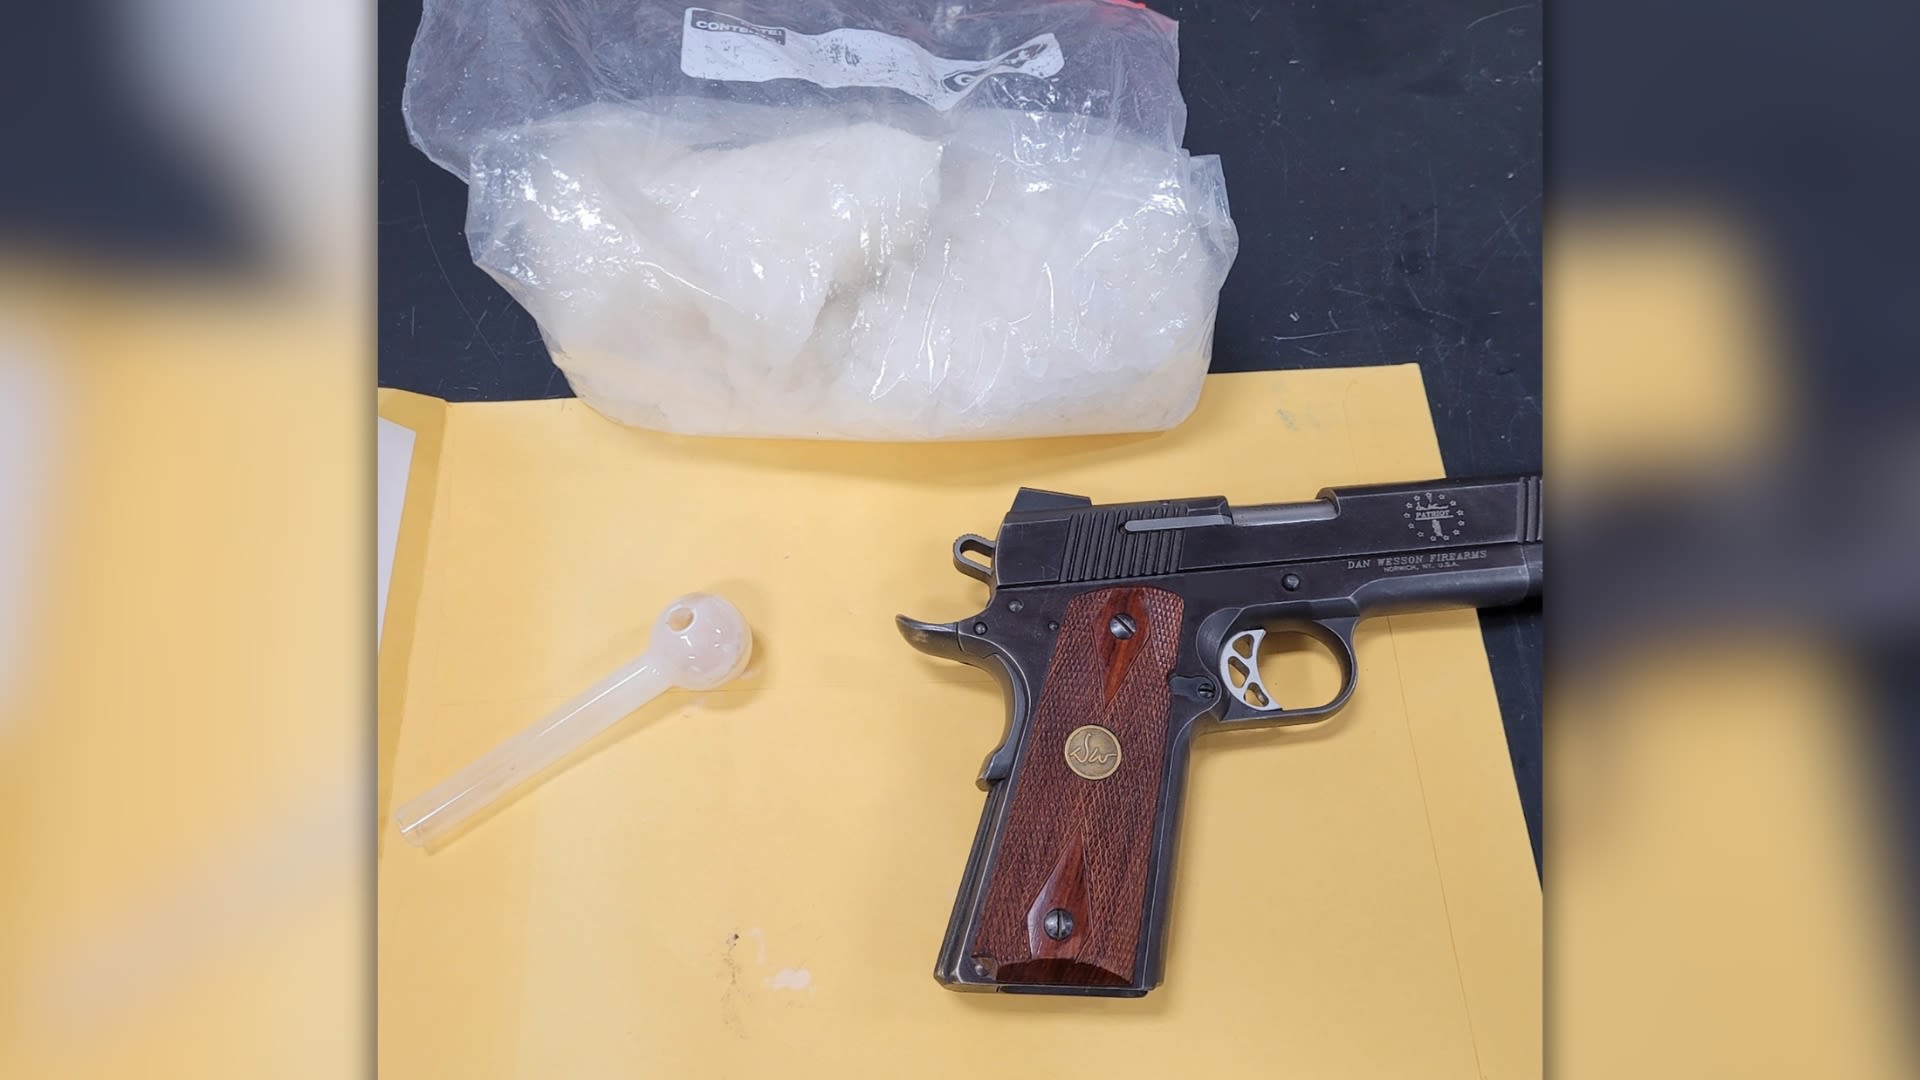 Deputies seize over a pound of meth, handgun in central Nebraska traffic stop